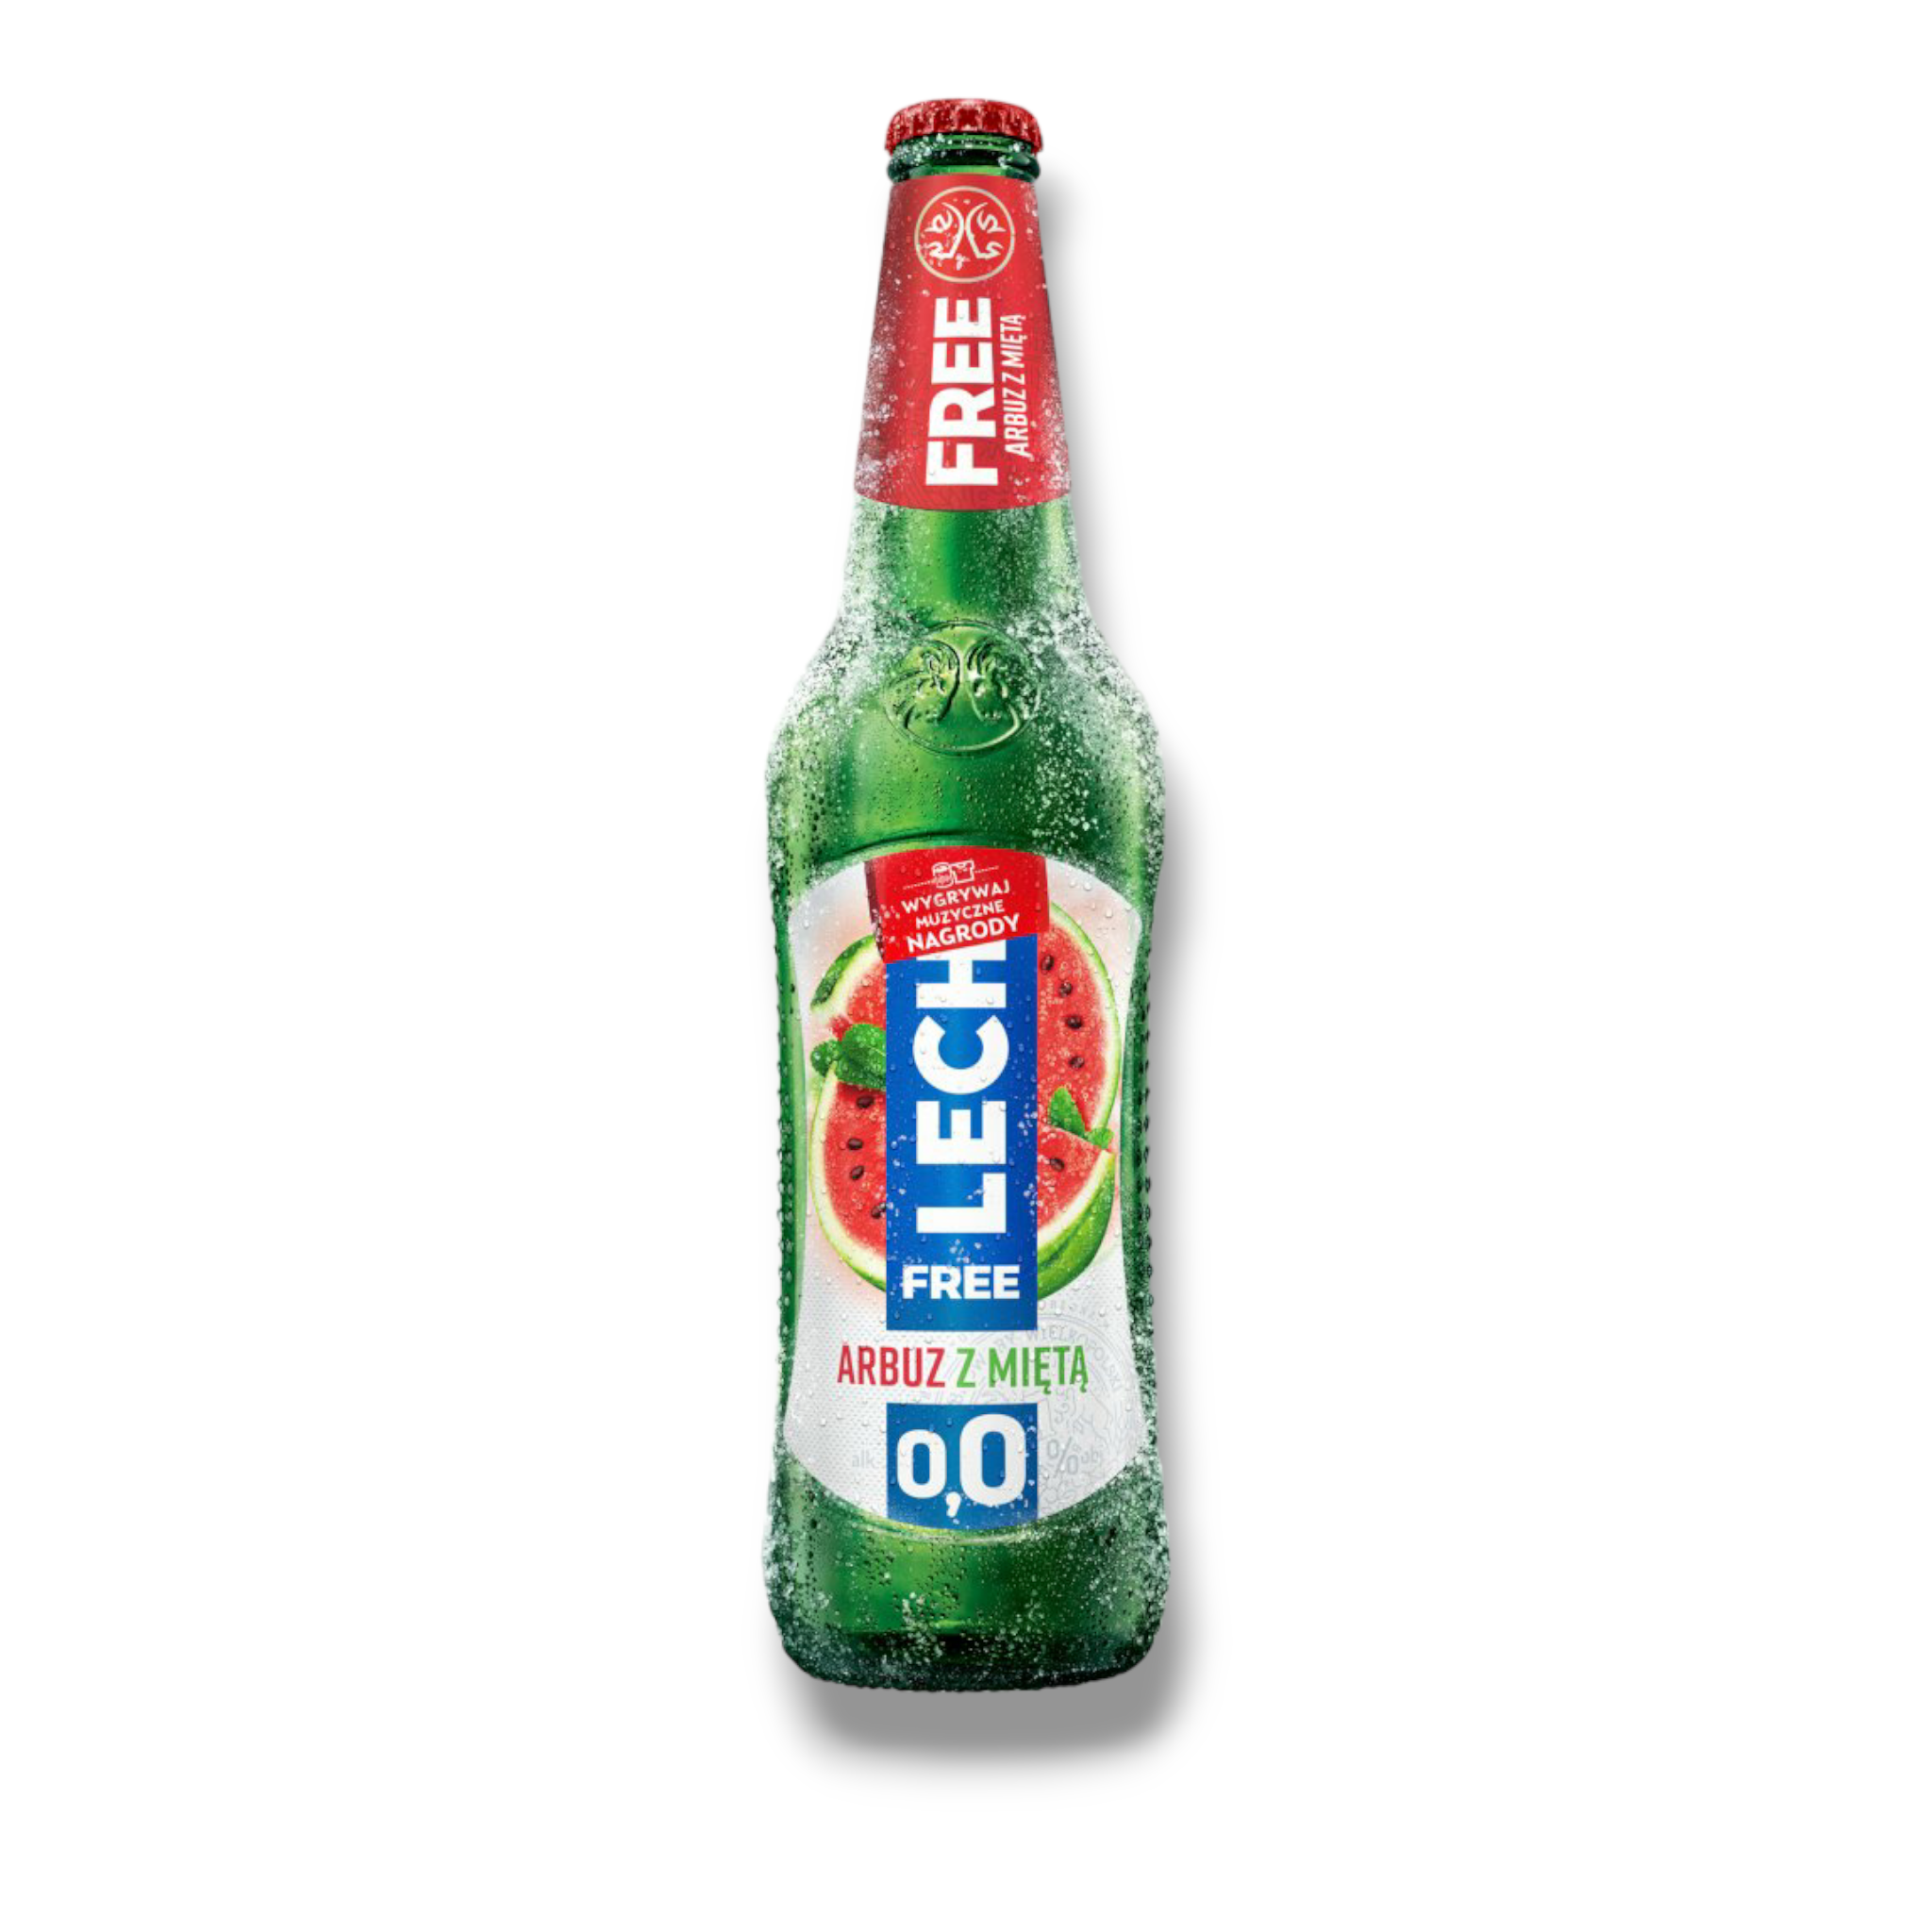 Lech free 0,33l- Wassermelone & Minze alkoholfreies Bier aus Polen 0,0% Vol.